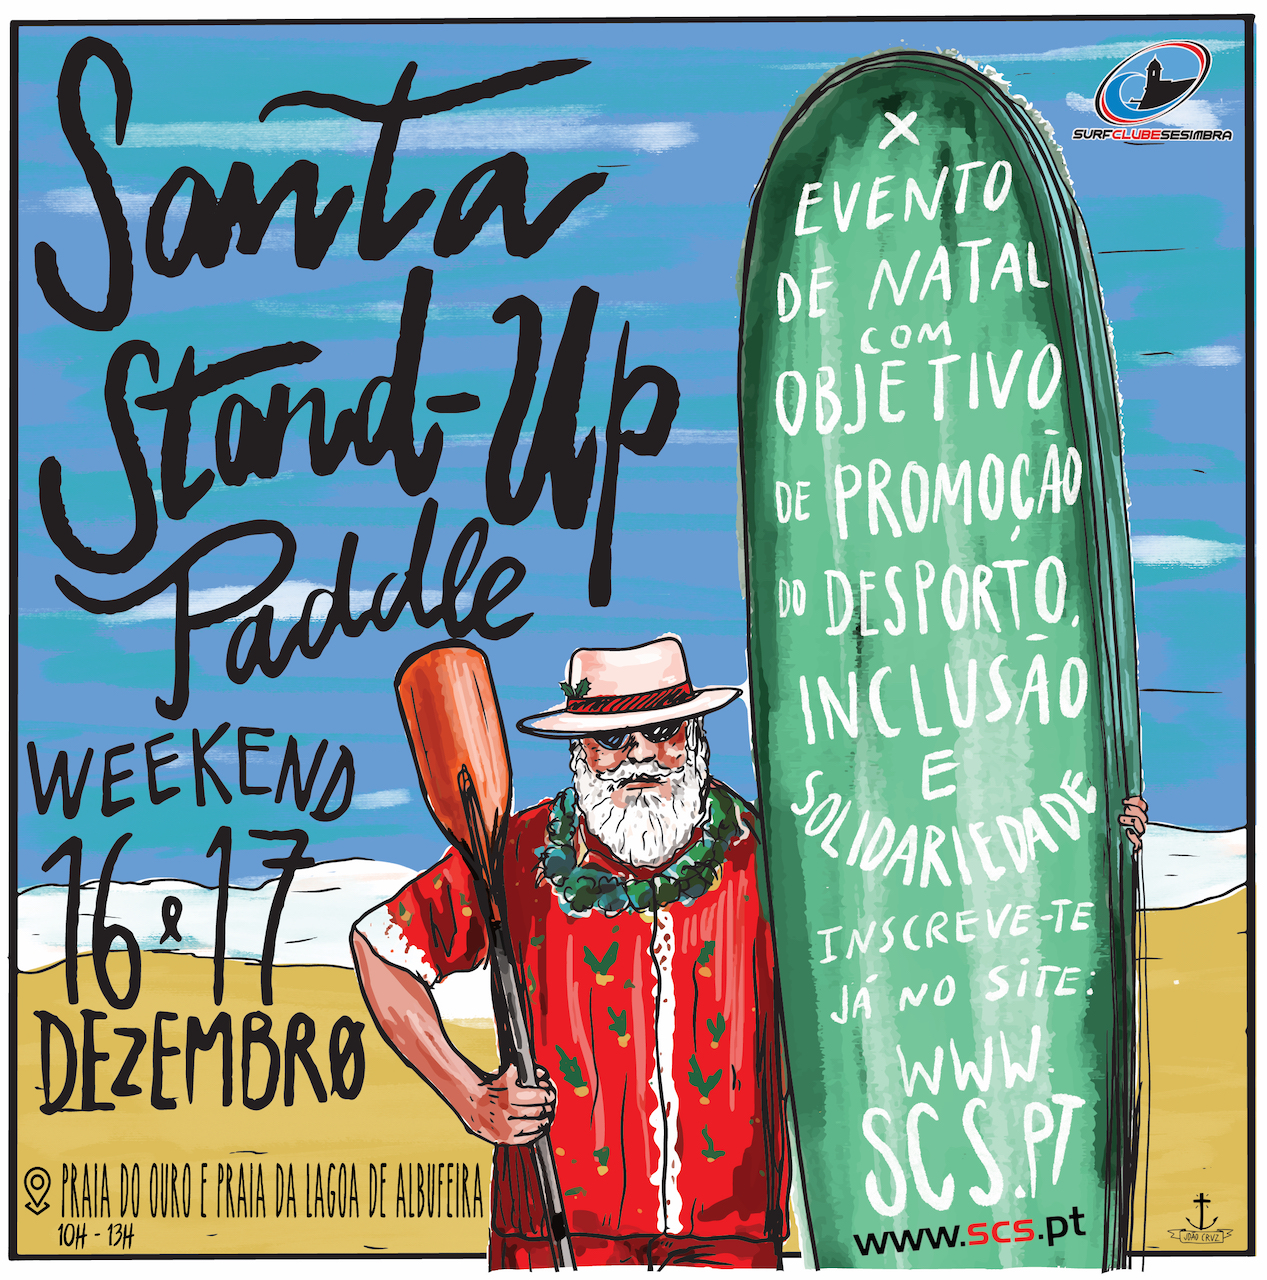  Remada do Natal em Stand-Up Paddle Boarding - dia 17 dezembro